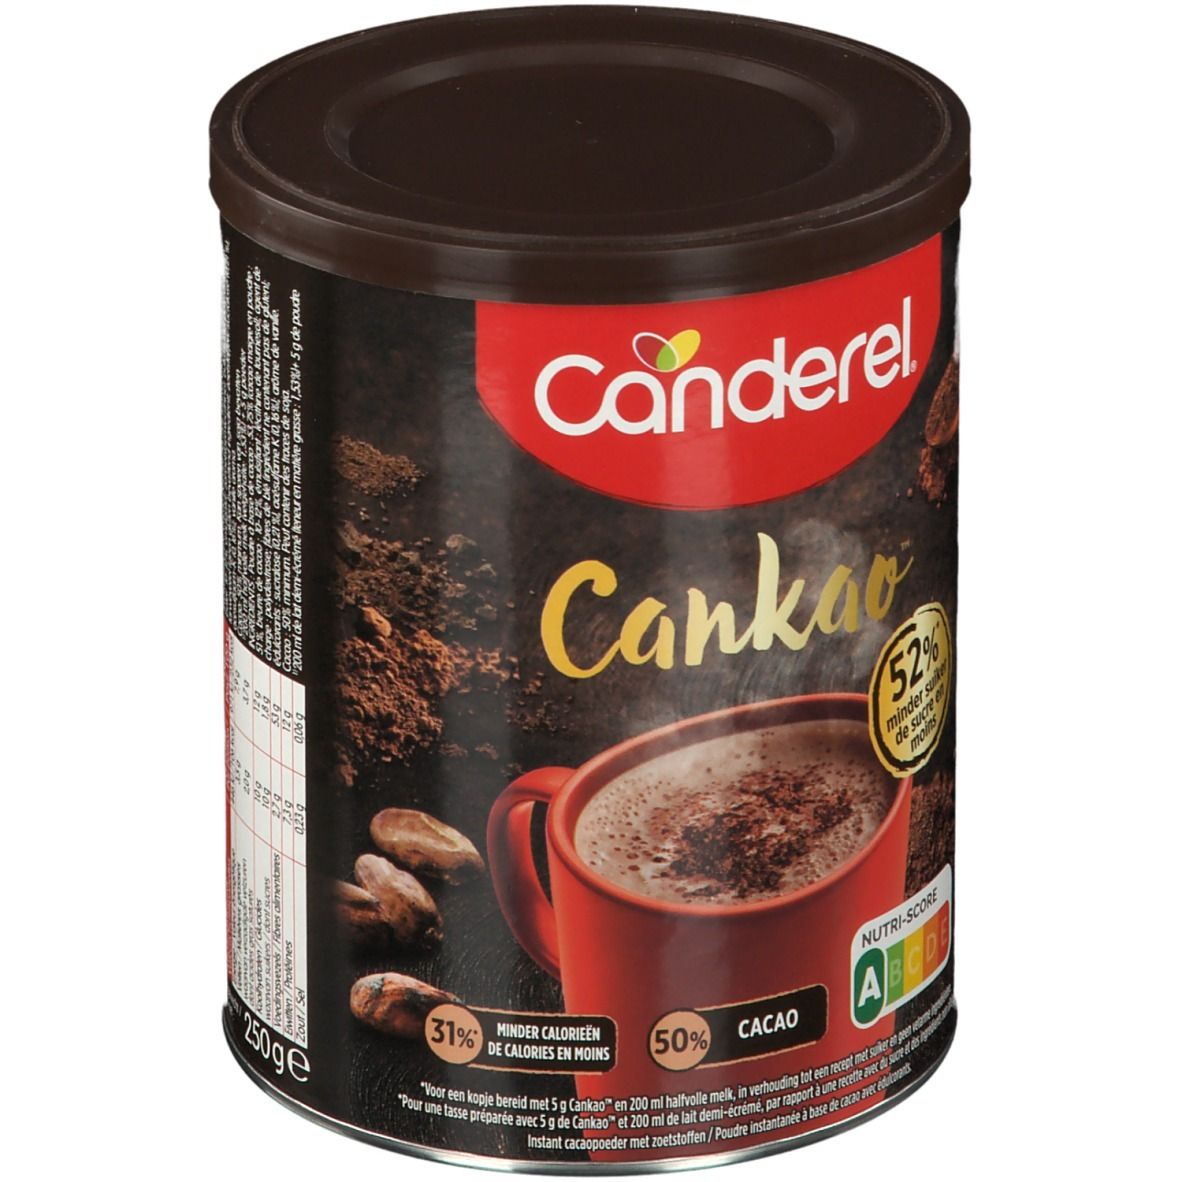 CankaO - poudre chocolatée - Canderel - 250 g